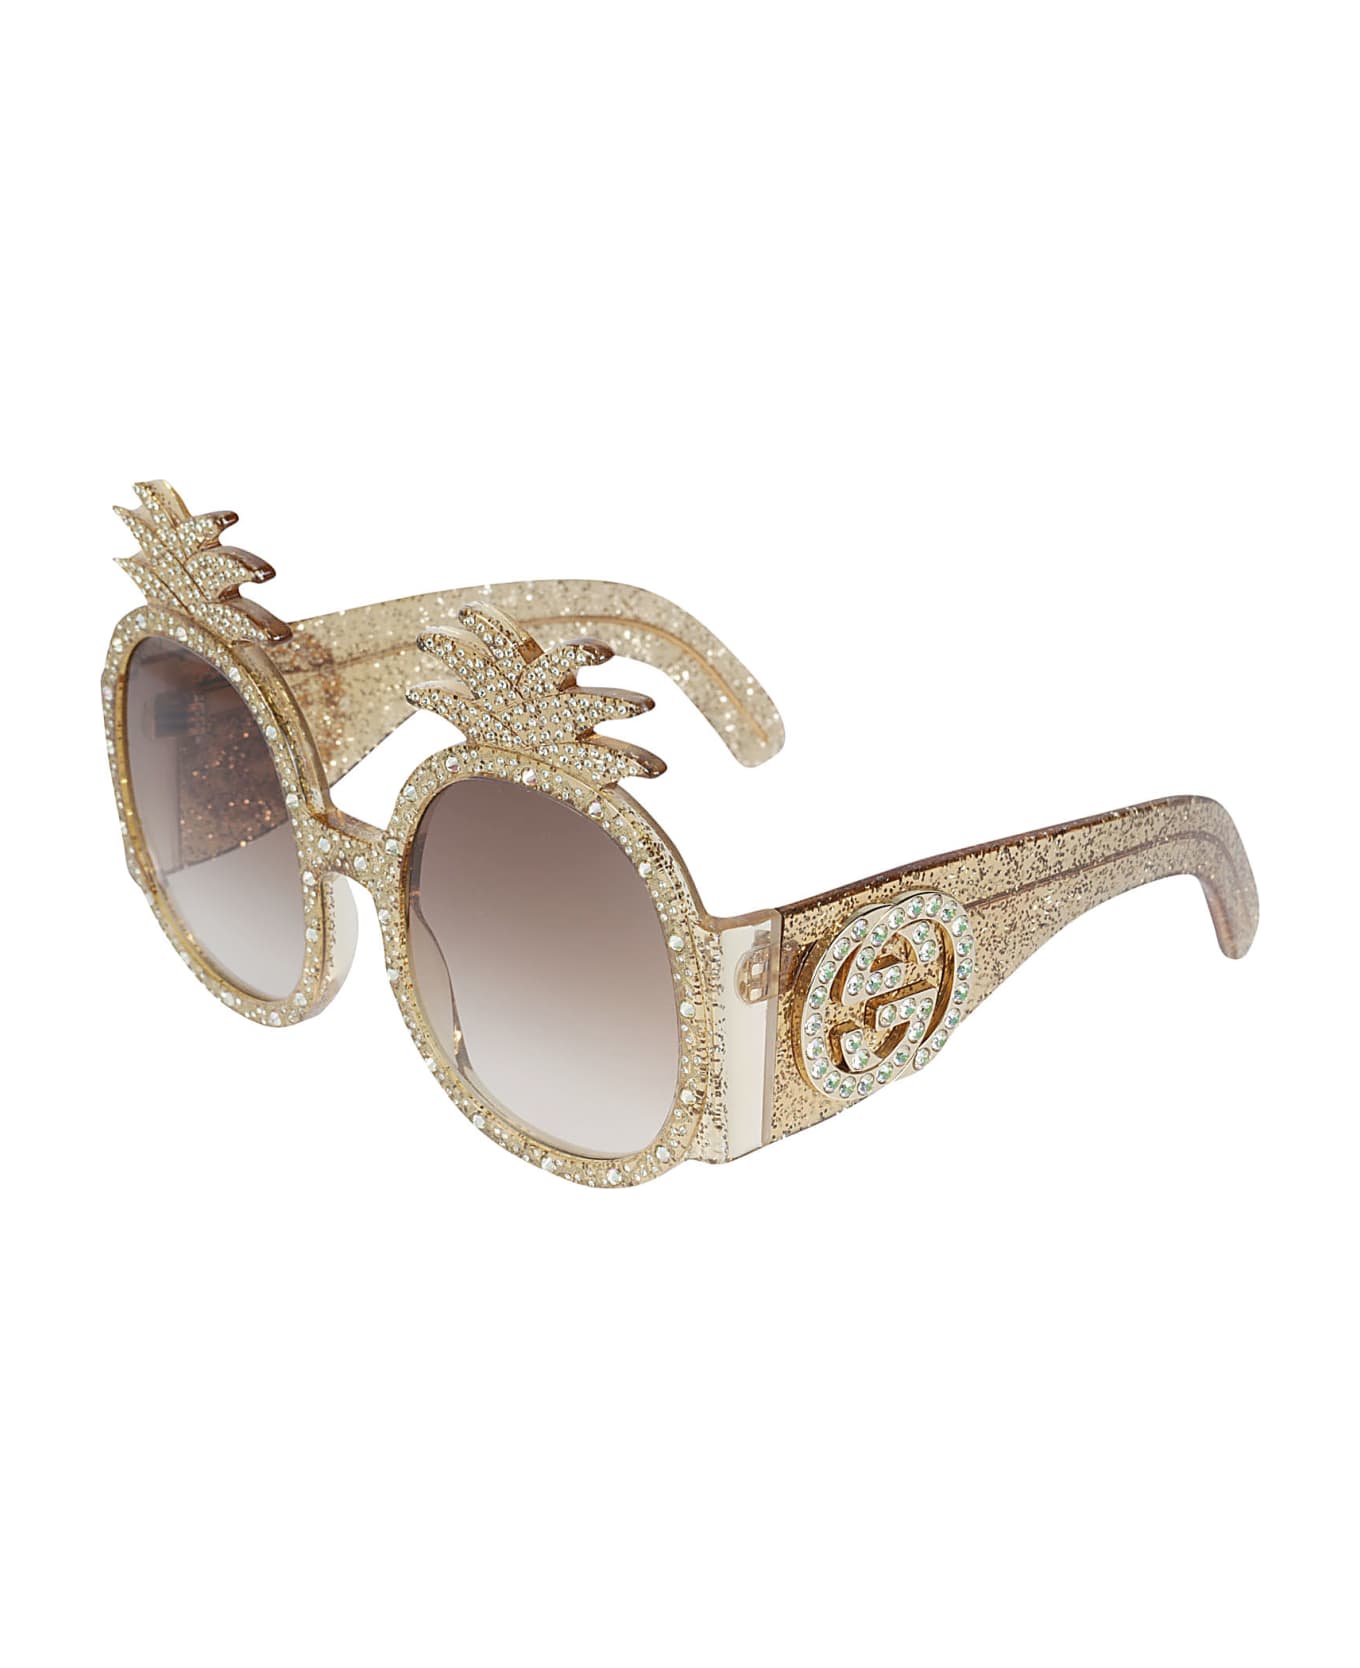 Gucci Eyewear Embellished Frame Sunglasses - 001 gold gold brown サングラス